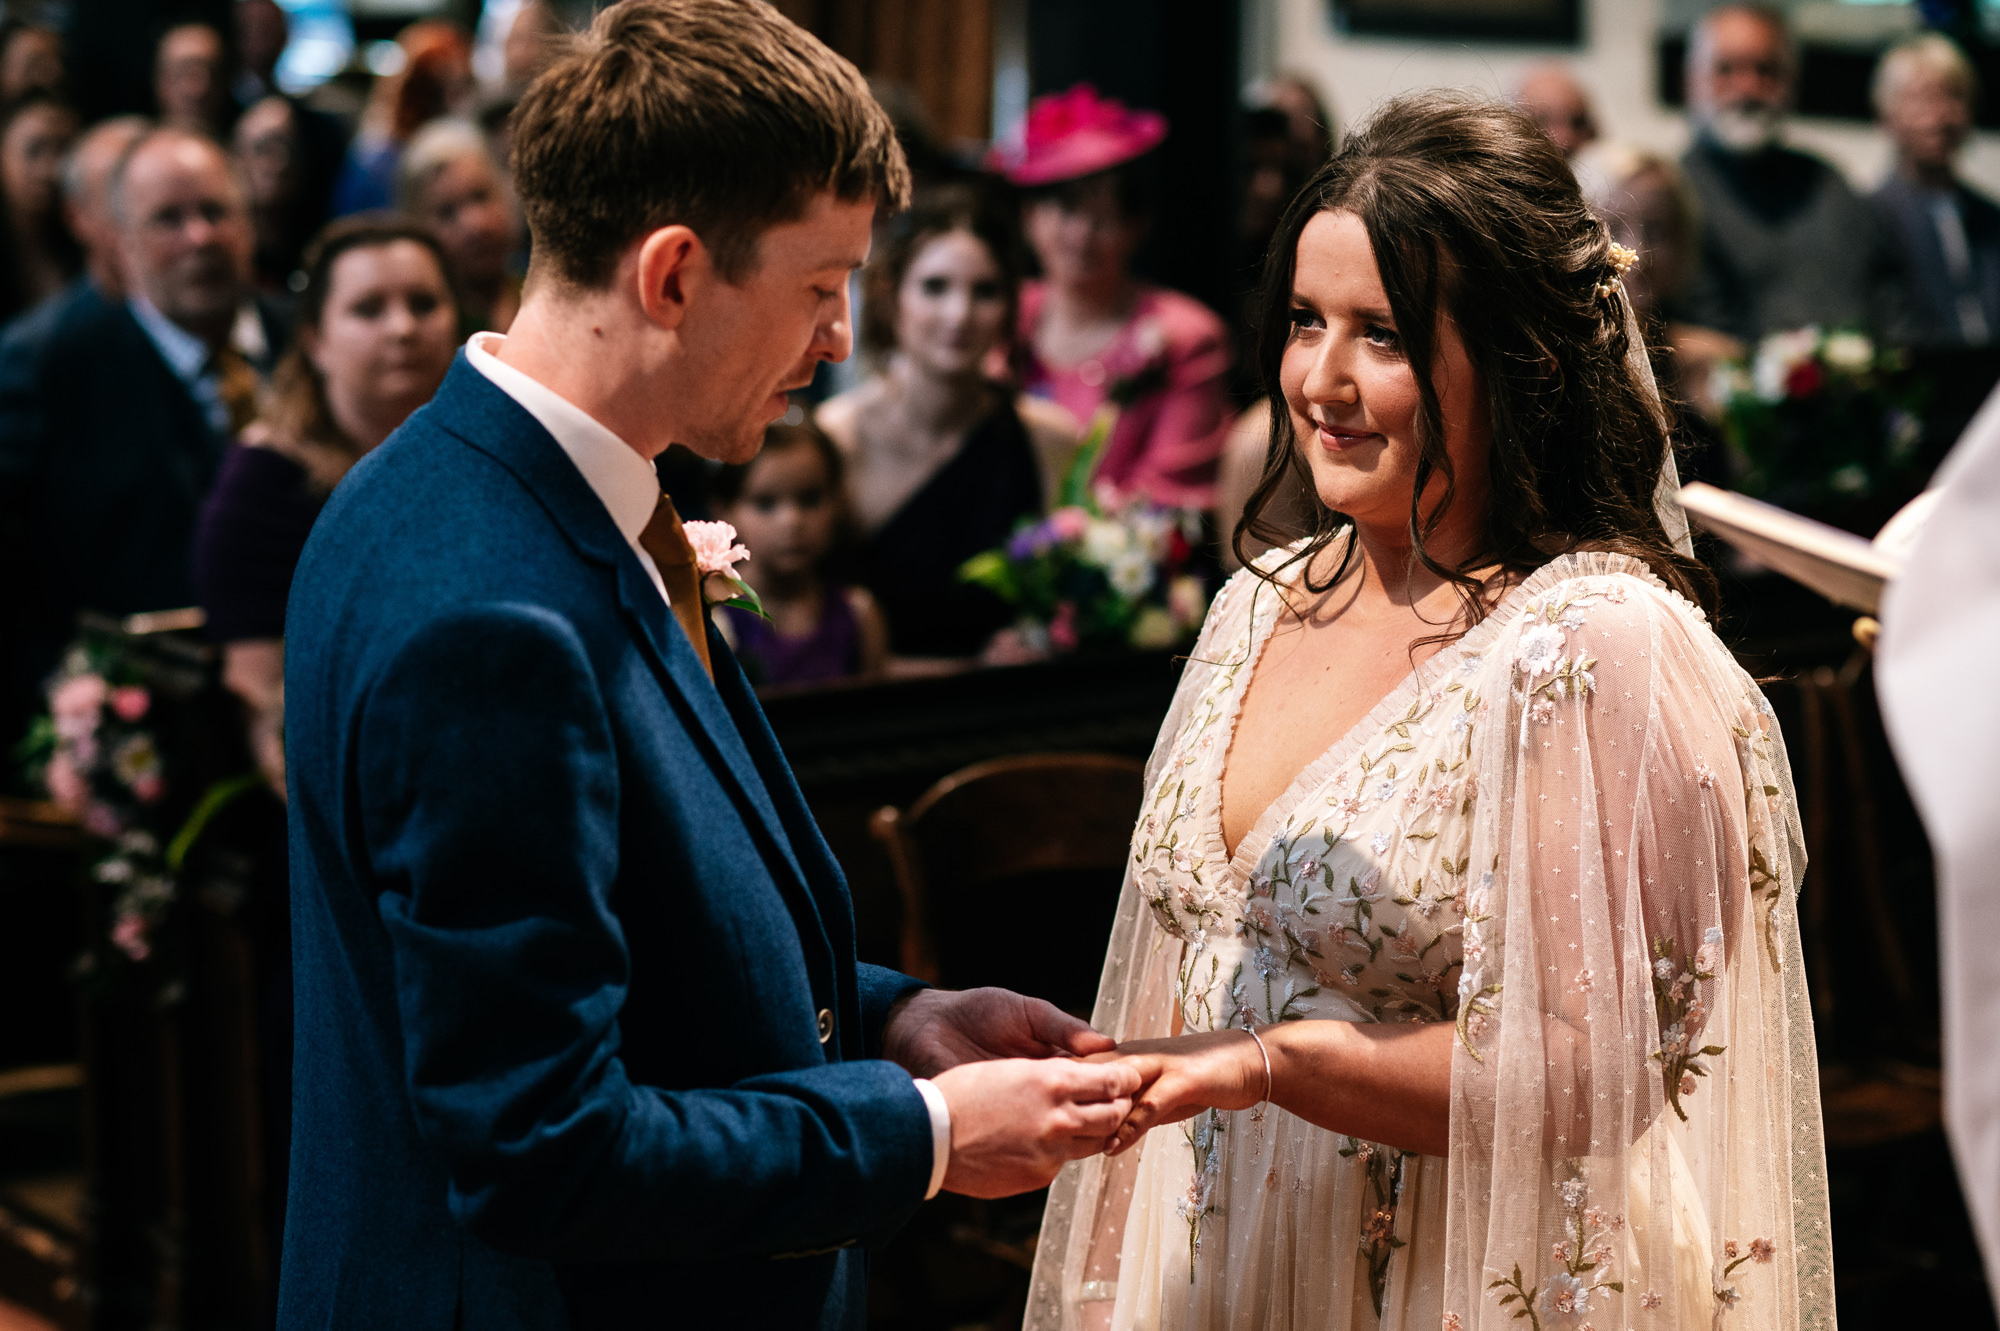 exchange of rings during betley village wedding